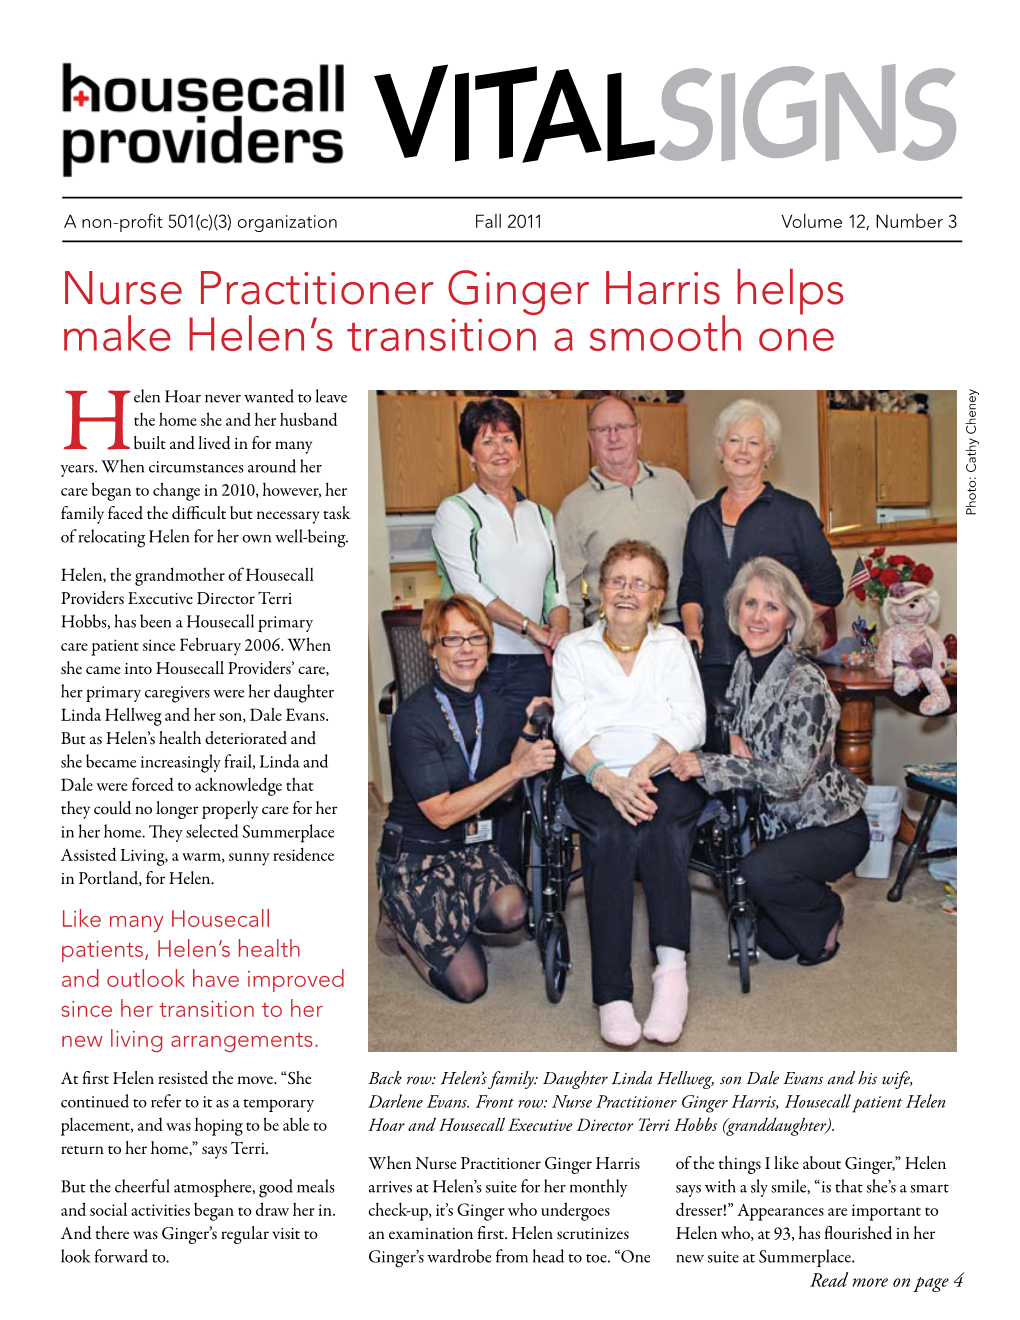 Nurse Practitioner Ginger Harris Helps Make Helen's Transition a Smooth